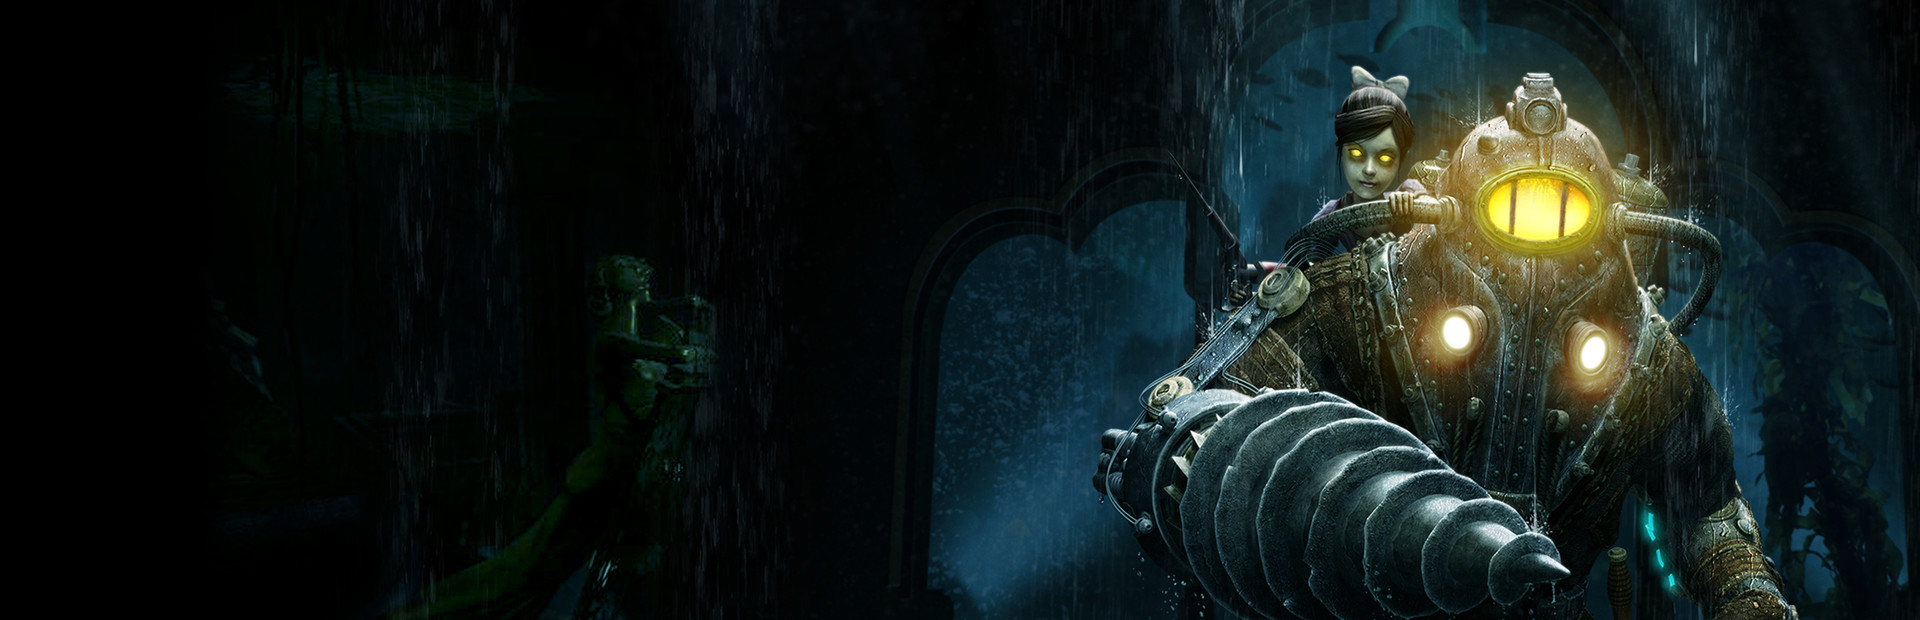 BioShock™ 2 Remastered cover image